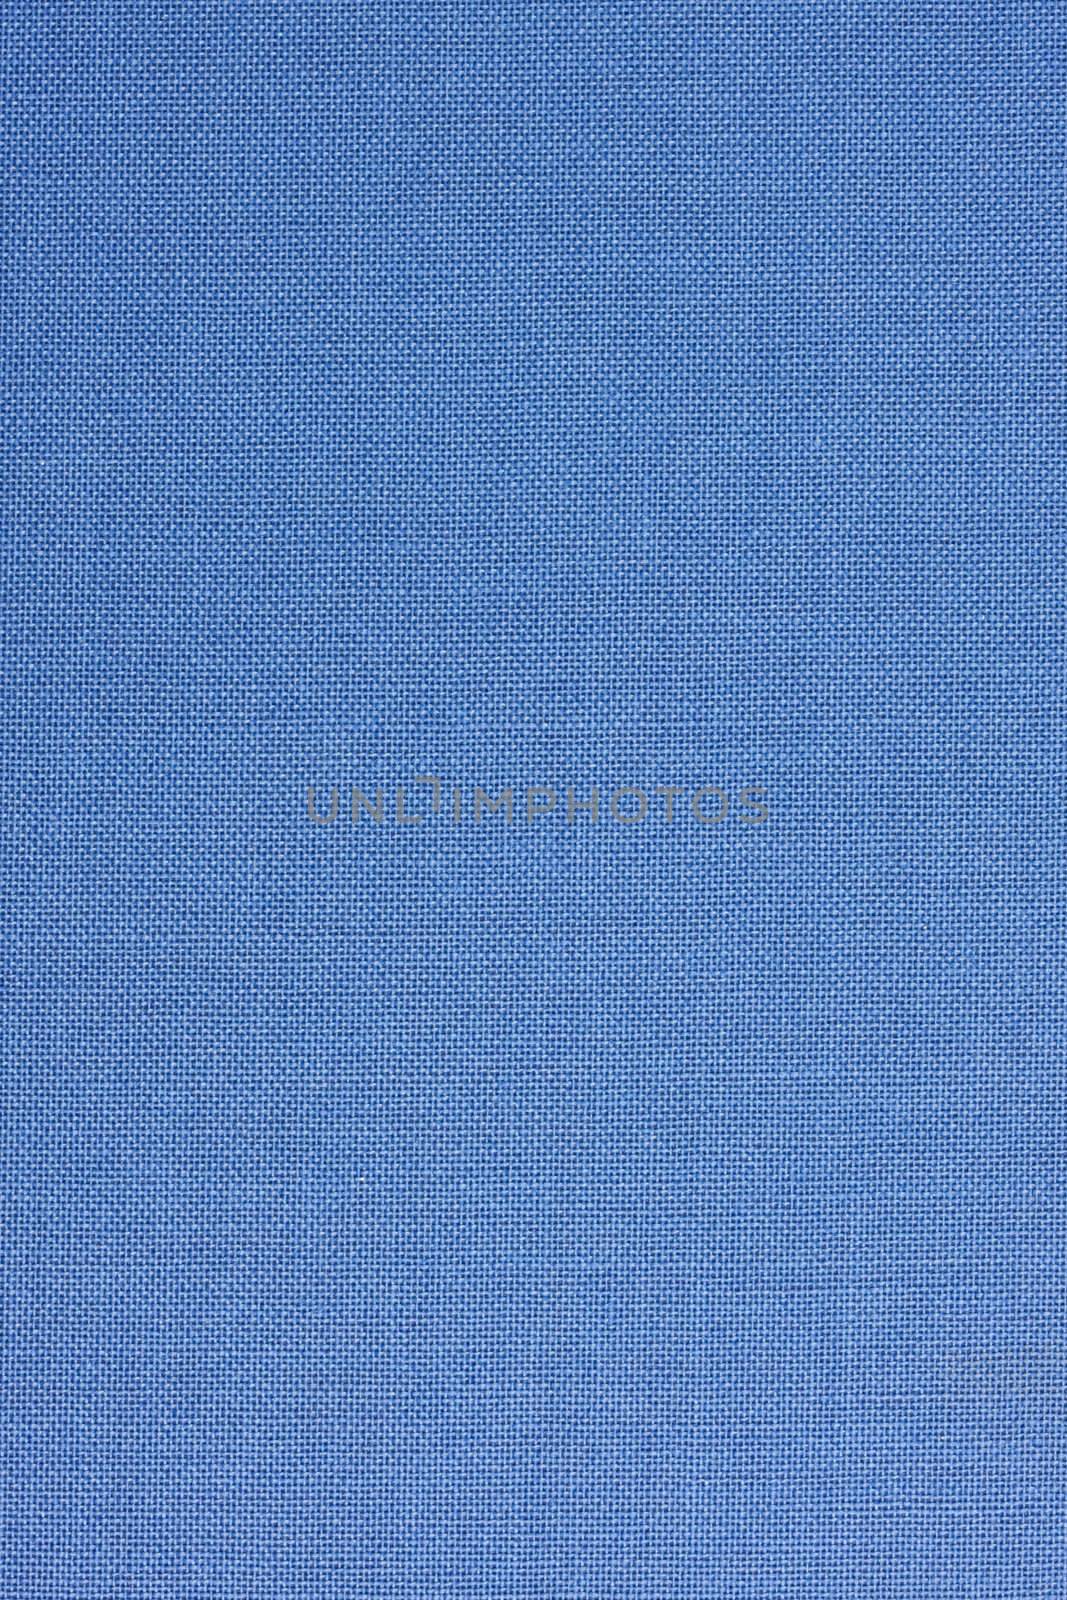 blue textile book cover by PixelsAway